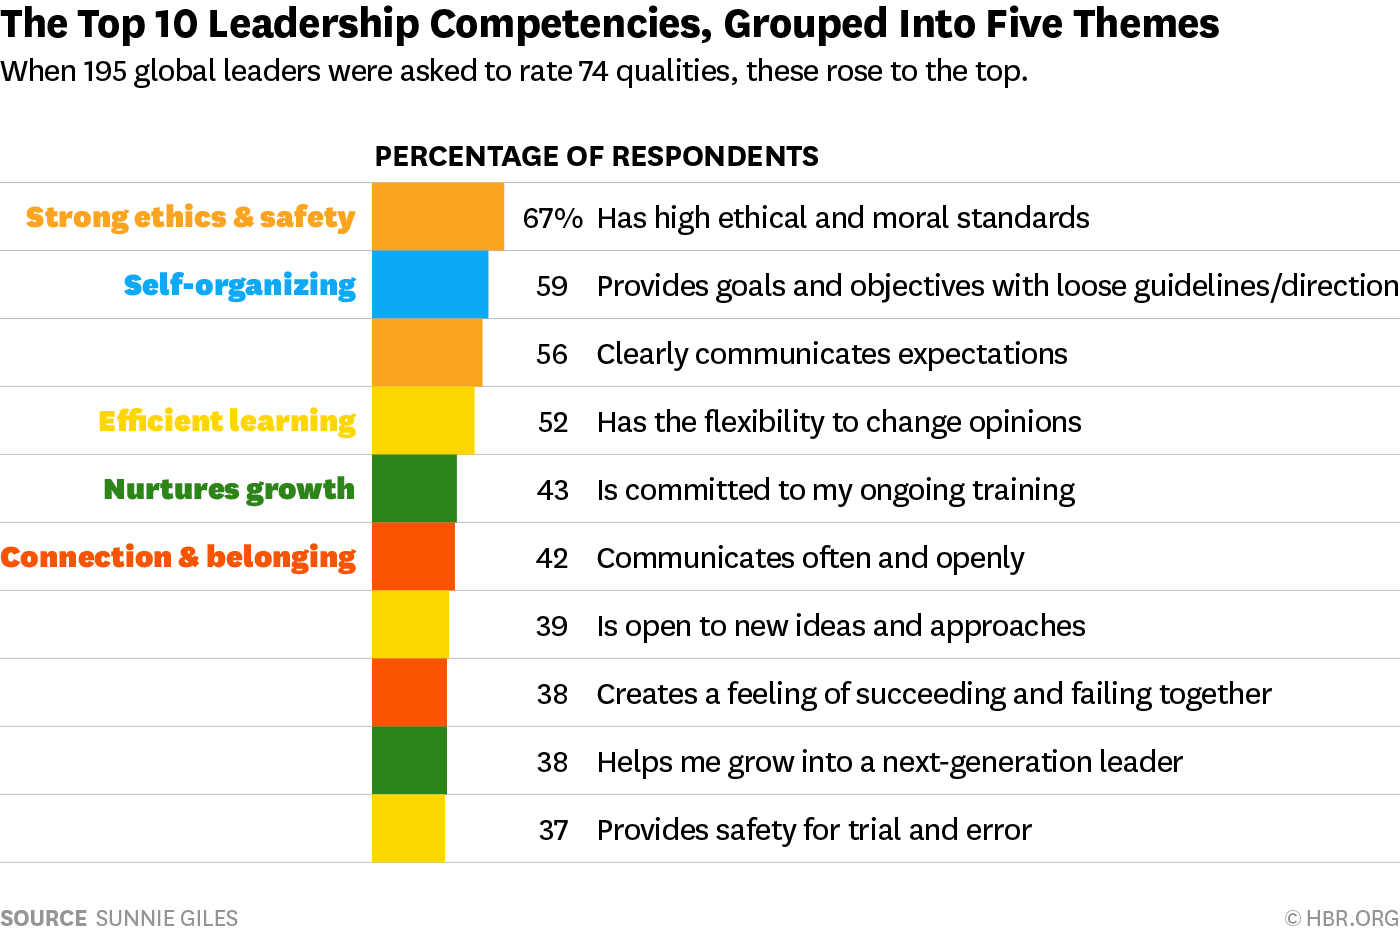 Core leadership competencies, via Harvard Business Review